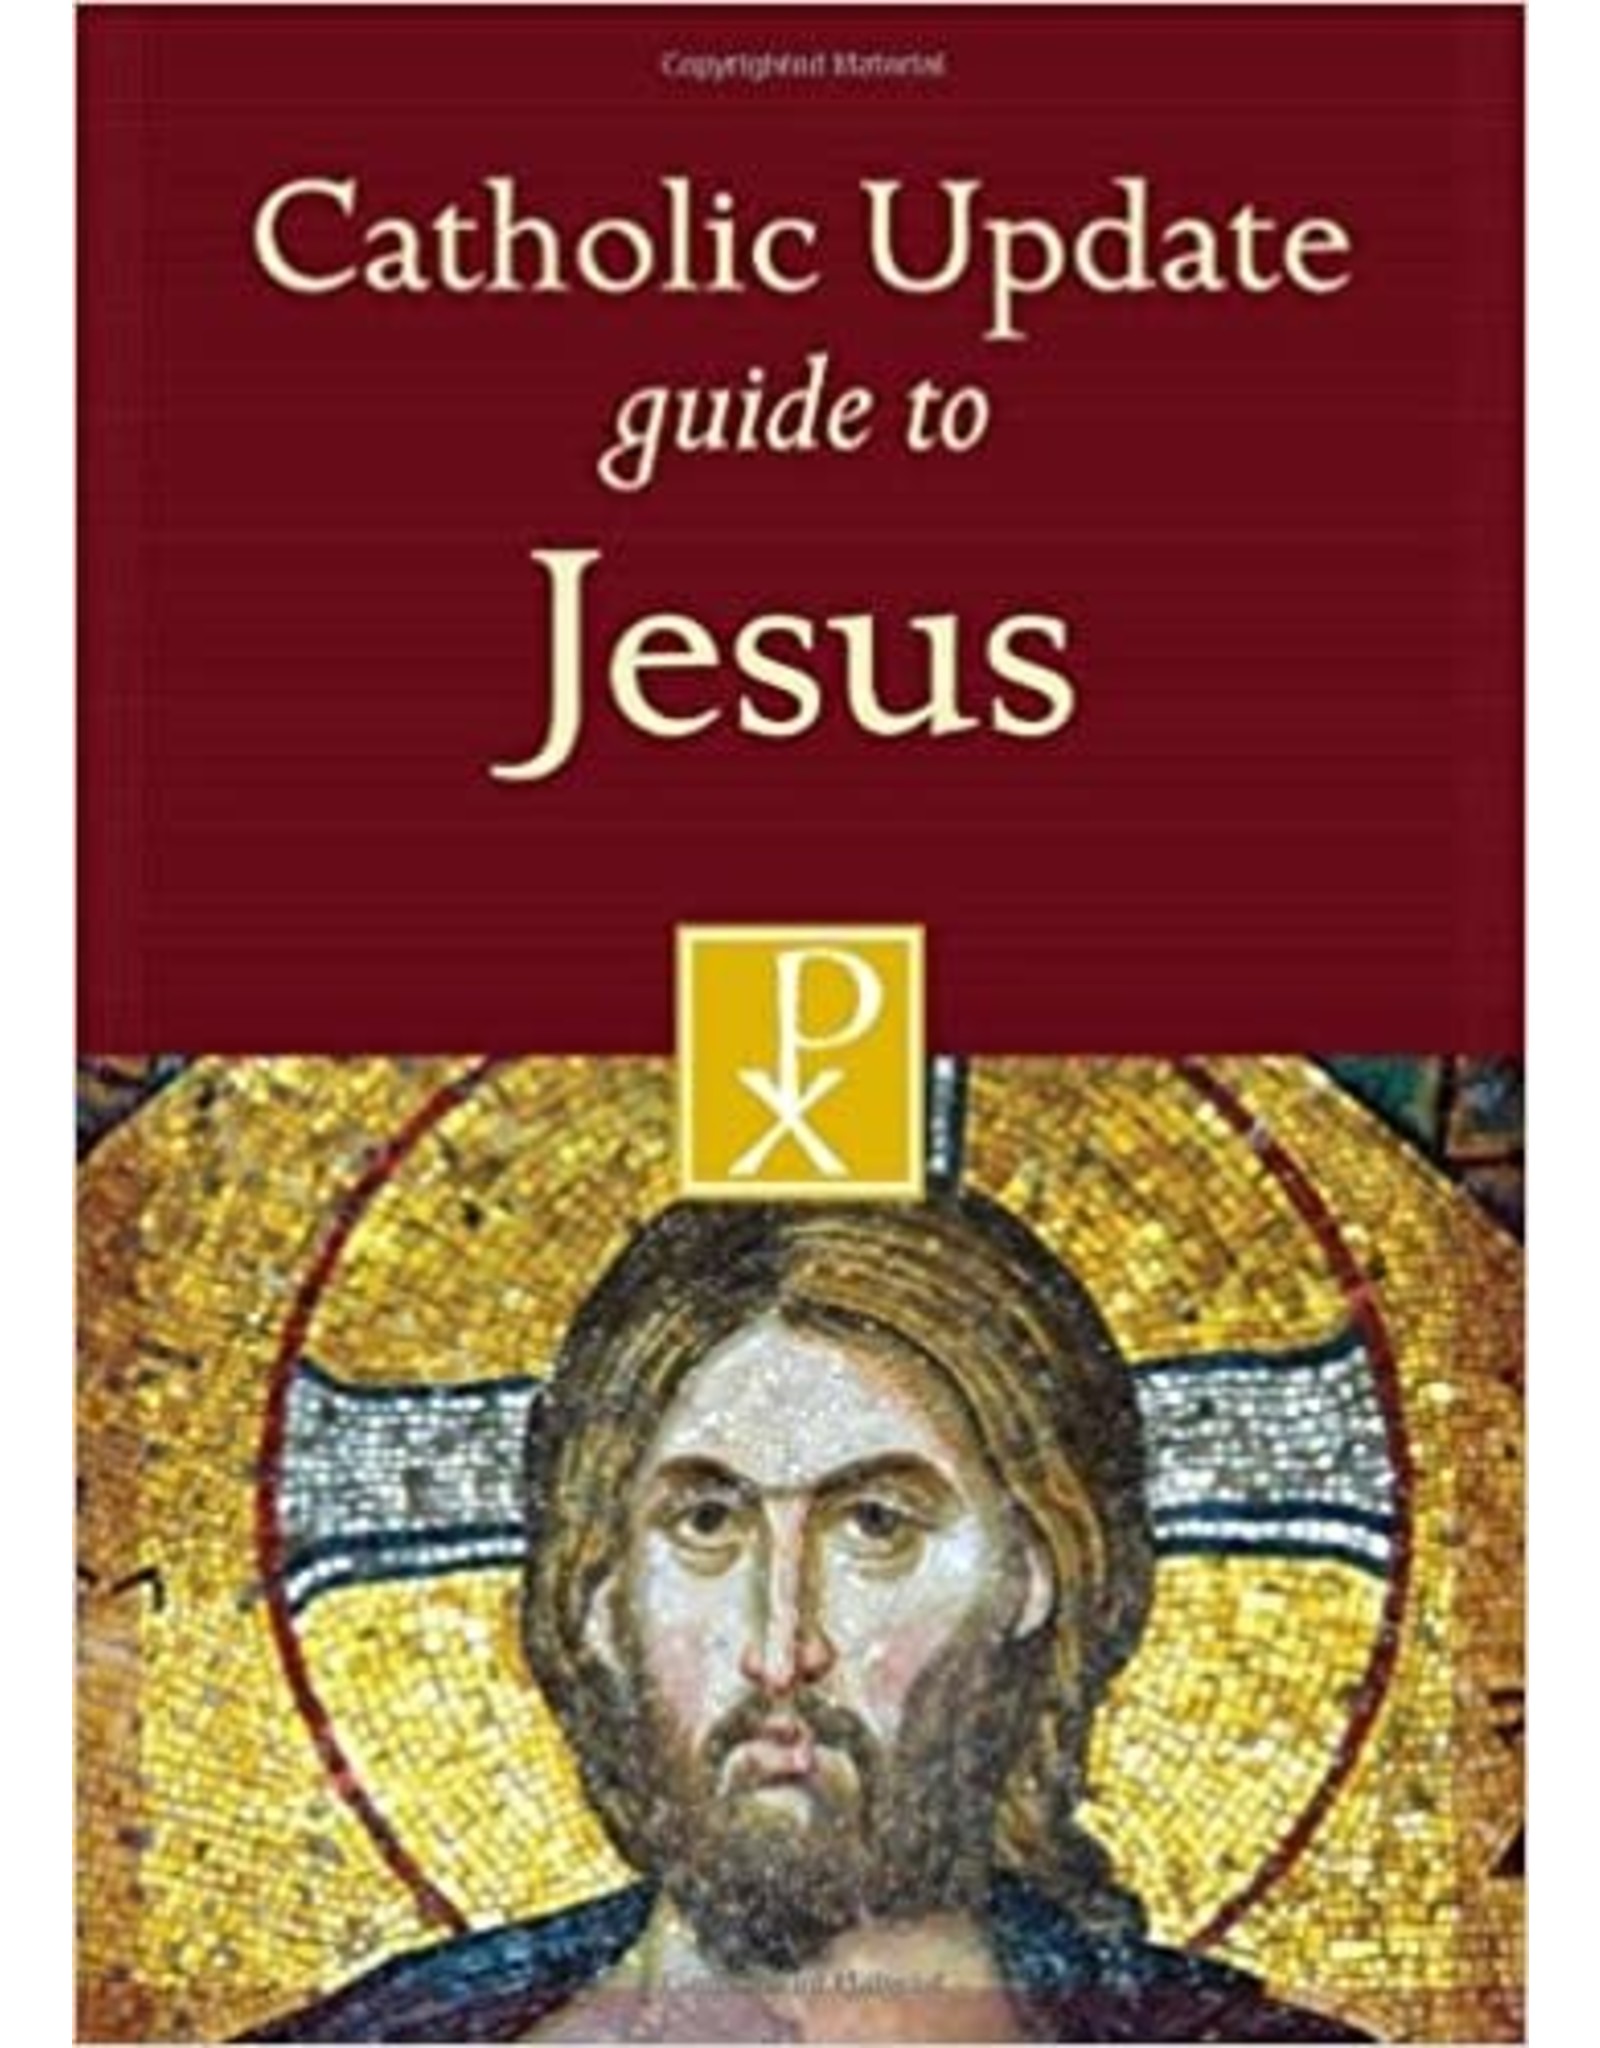 Liguori Publications CATHOLIC UPDATE GUIDE TO JESUS